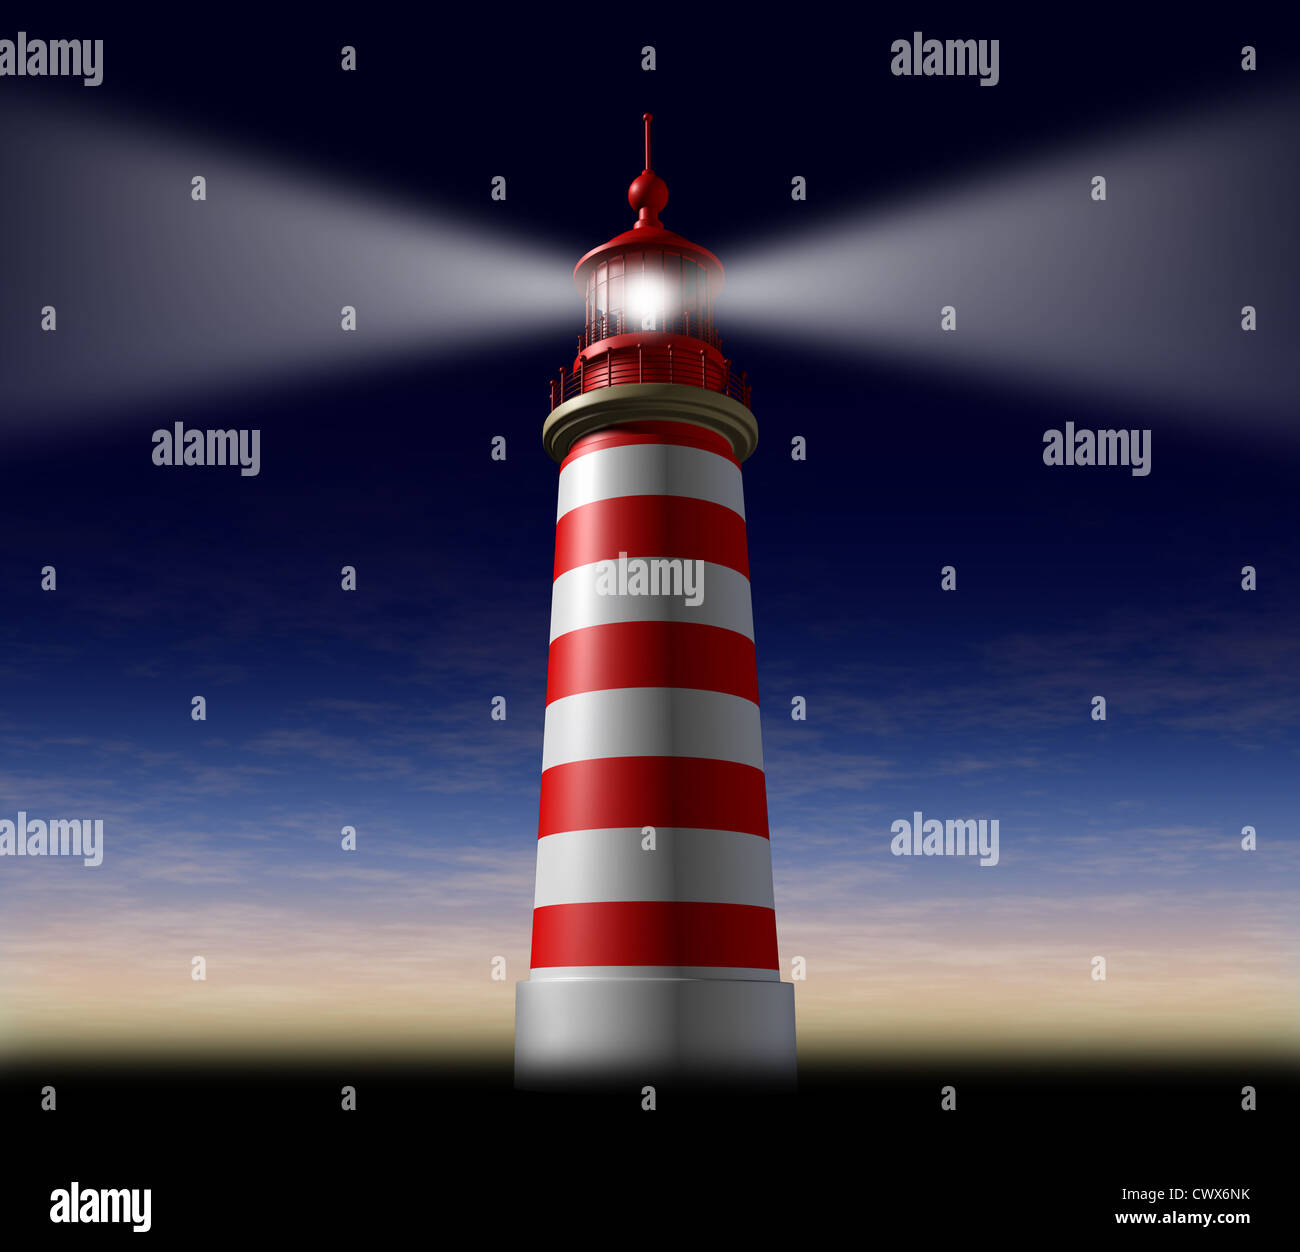 Large tower beacon light